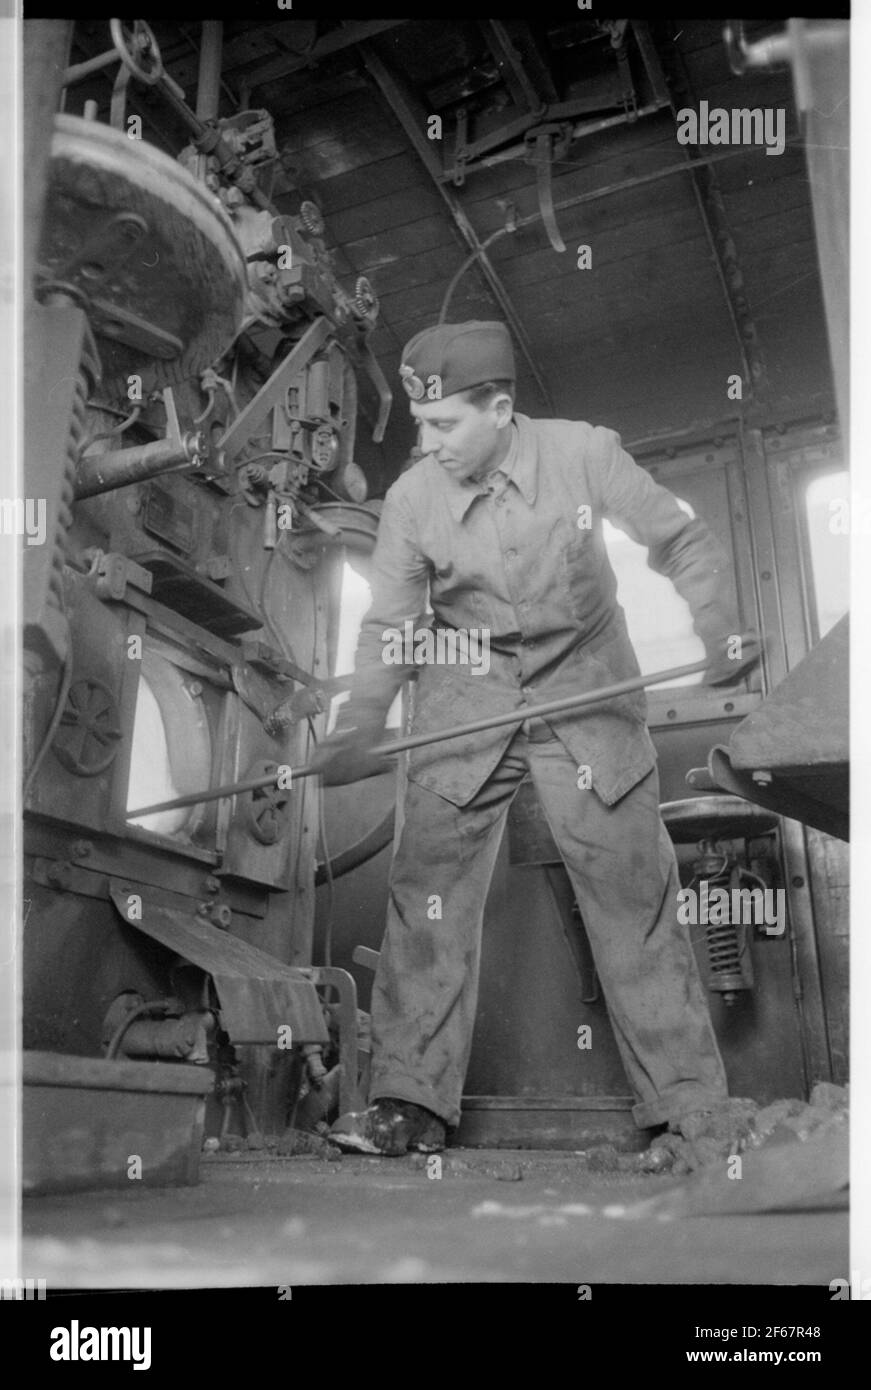 Locomotive in work Stock Photo - Alamy